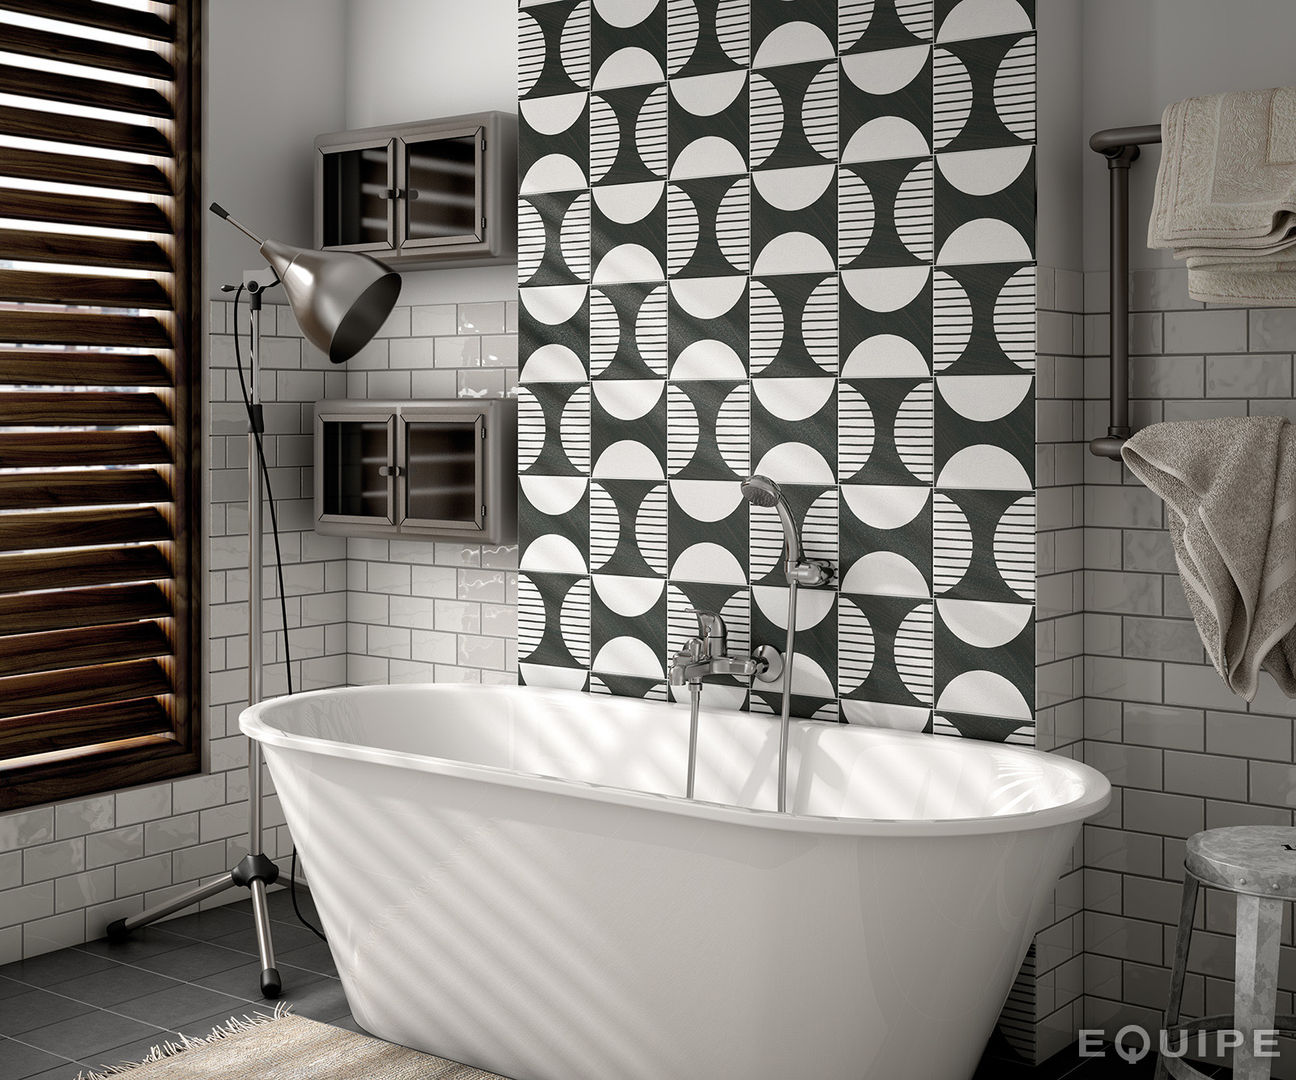 Caprice Deco, Equipe Ceramicas Equipe Ceramicas Ванная комната в стиле модерн